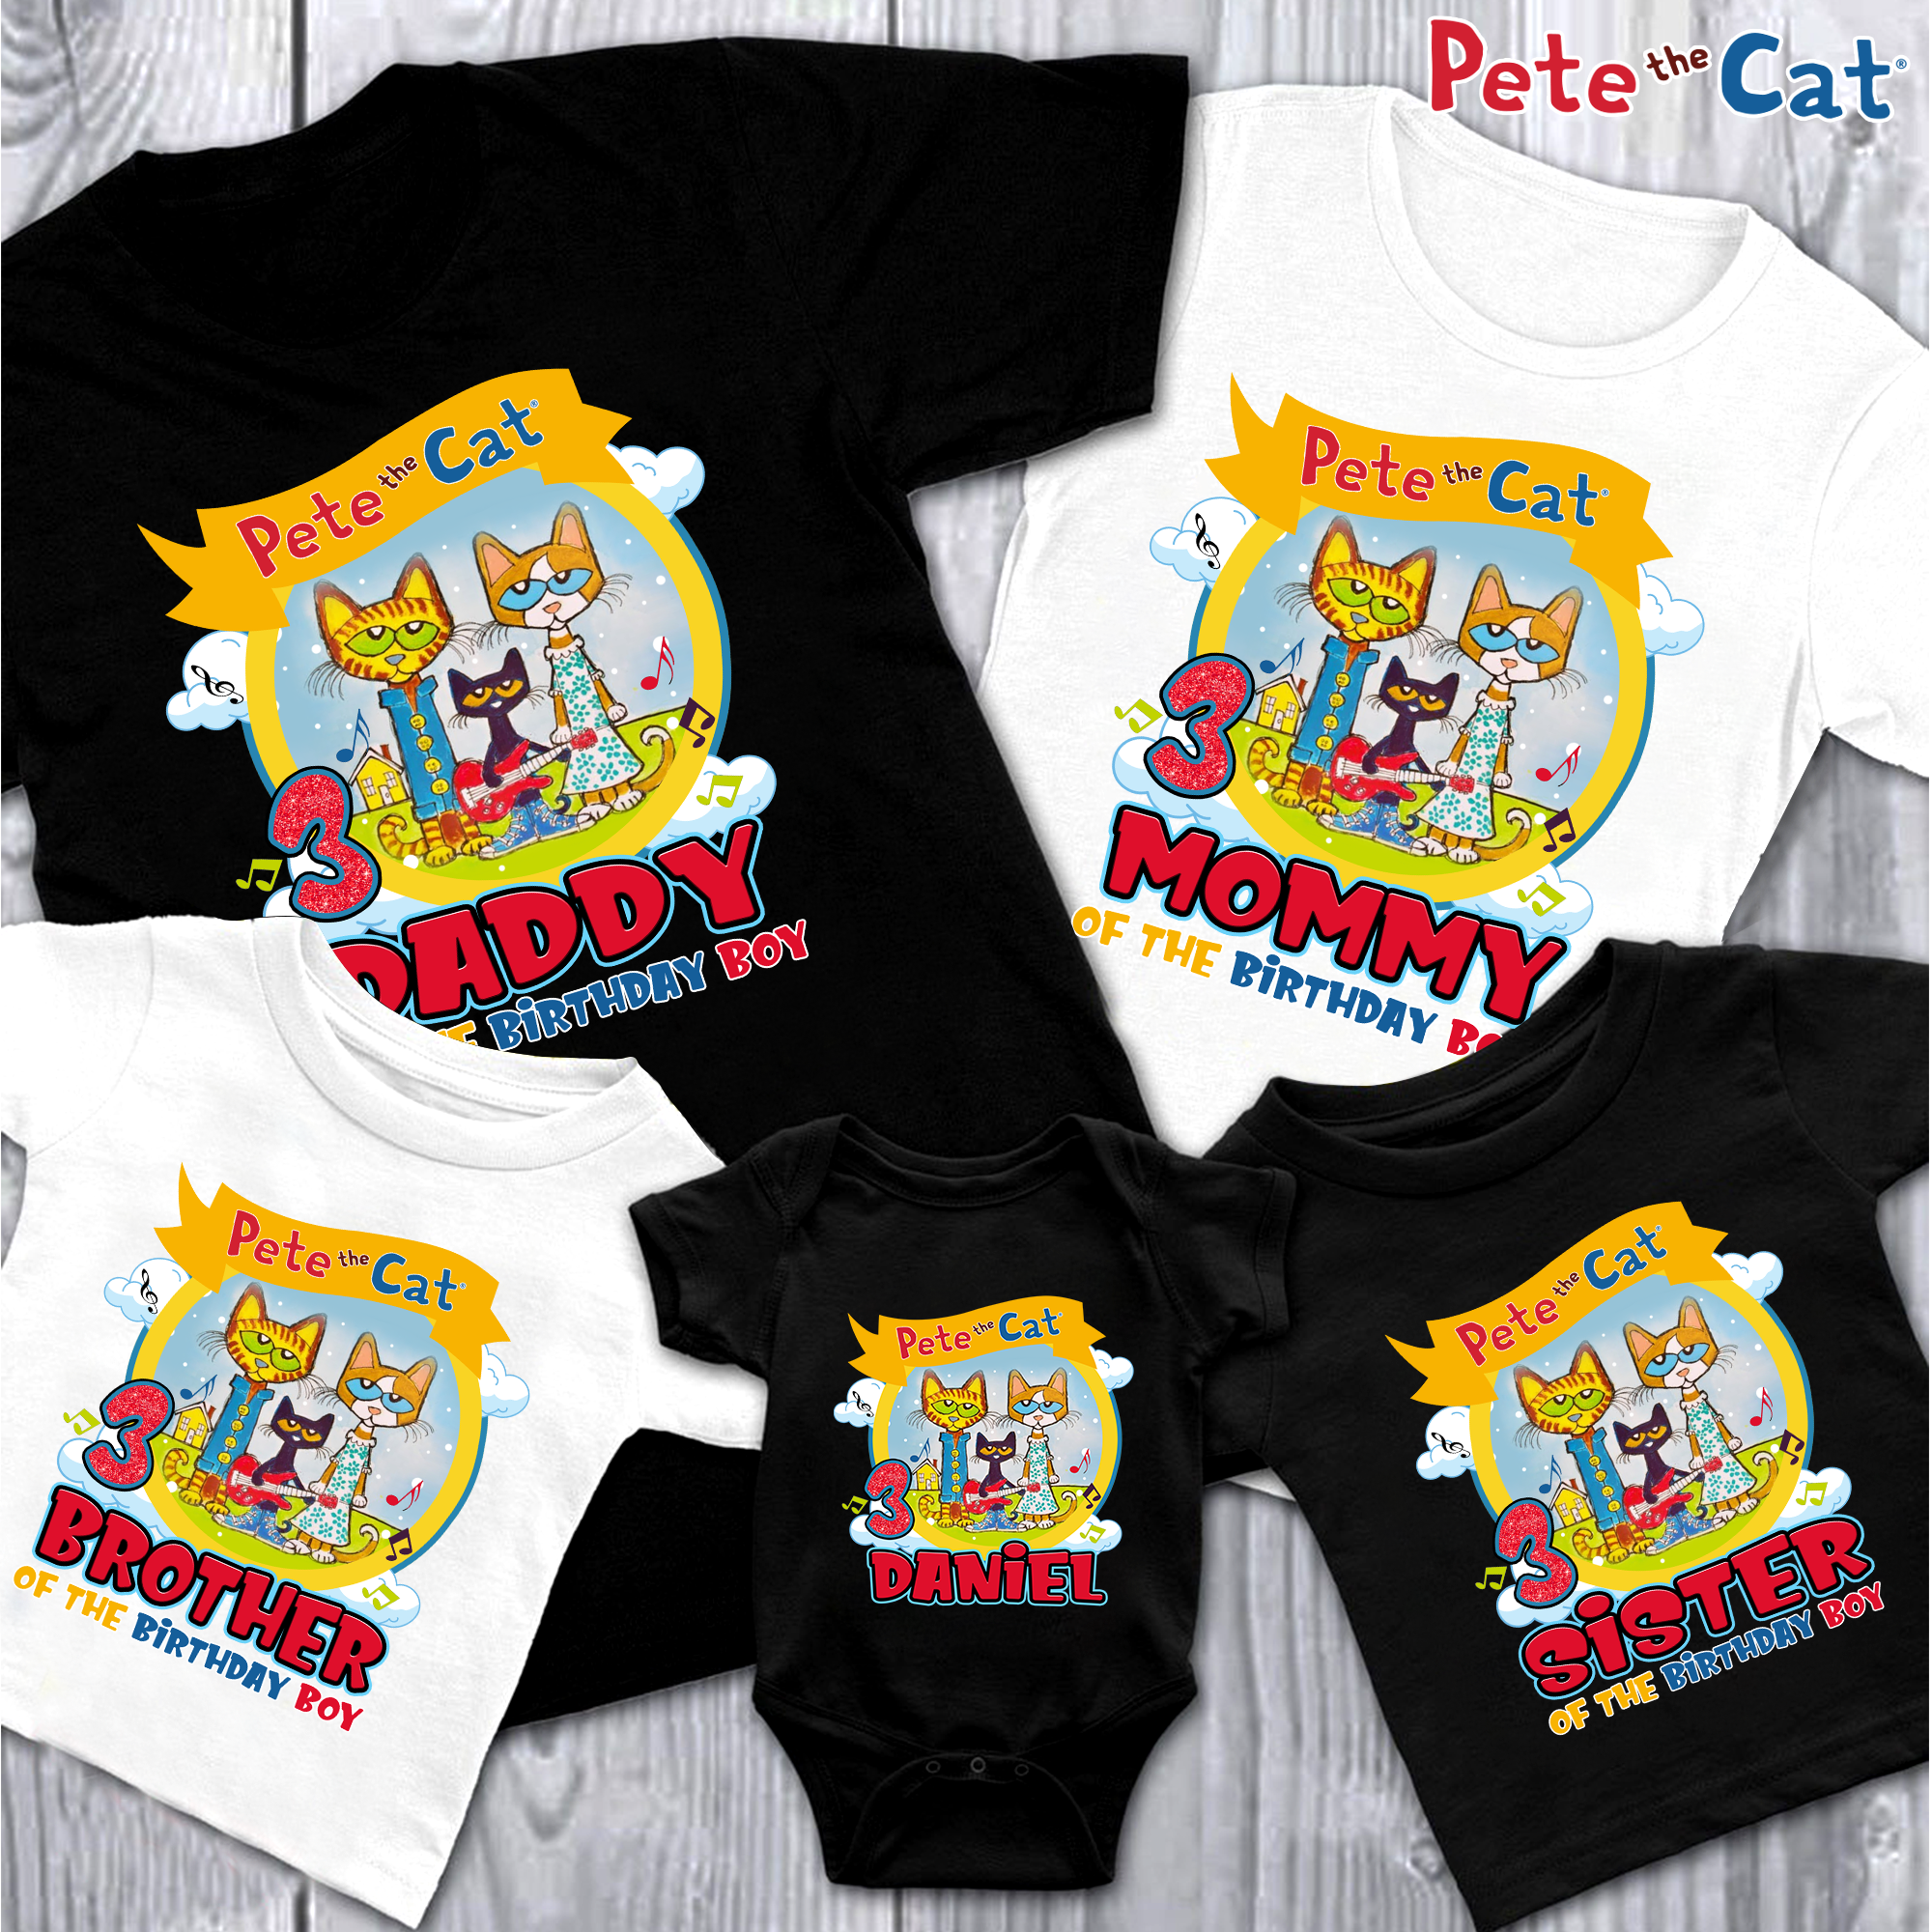 Personalized Pete The Cat Birthday Shirt, Pete The Cat Matching Family Shirt, Pete The Cat Shirt, Groovy Shirt